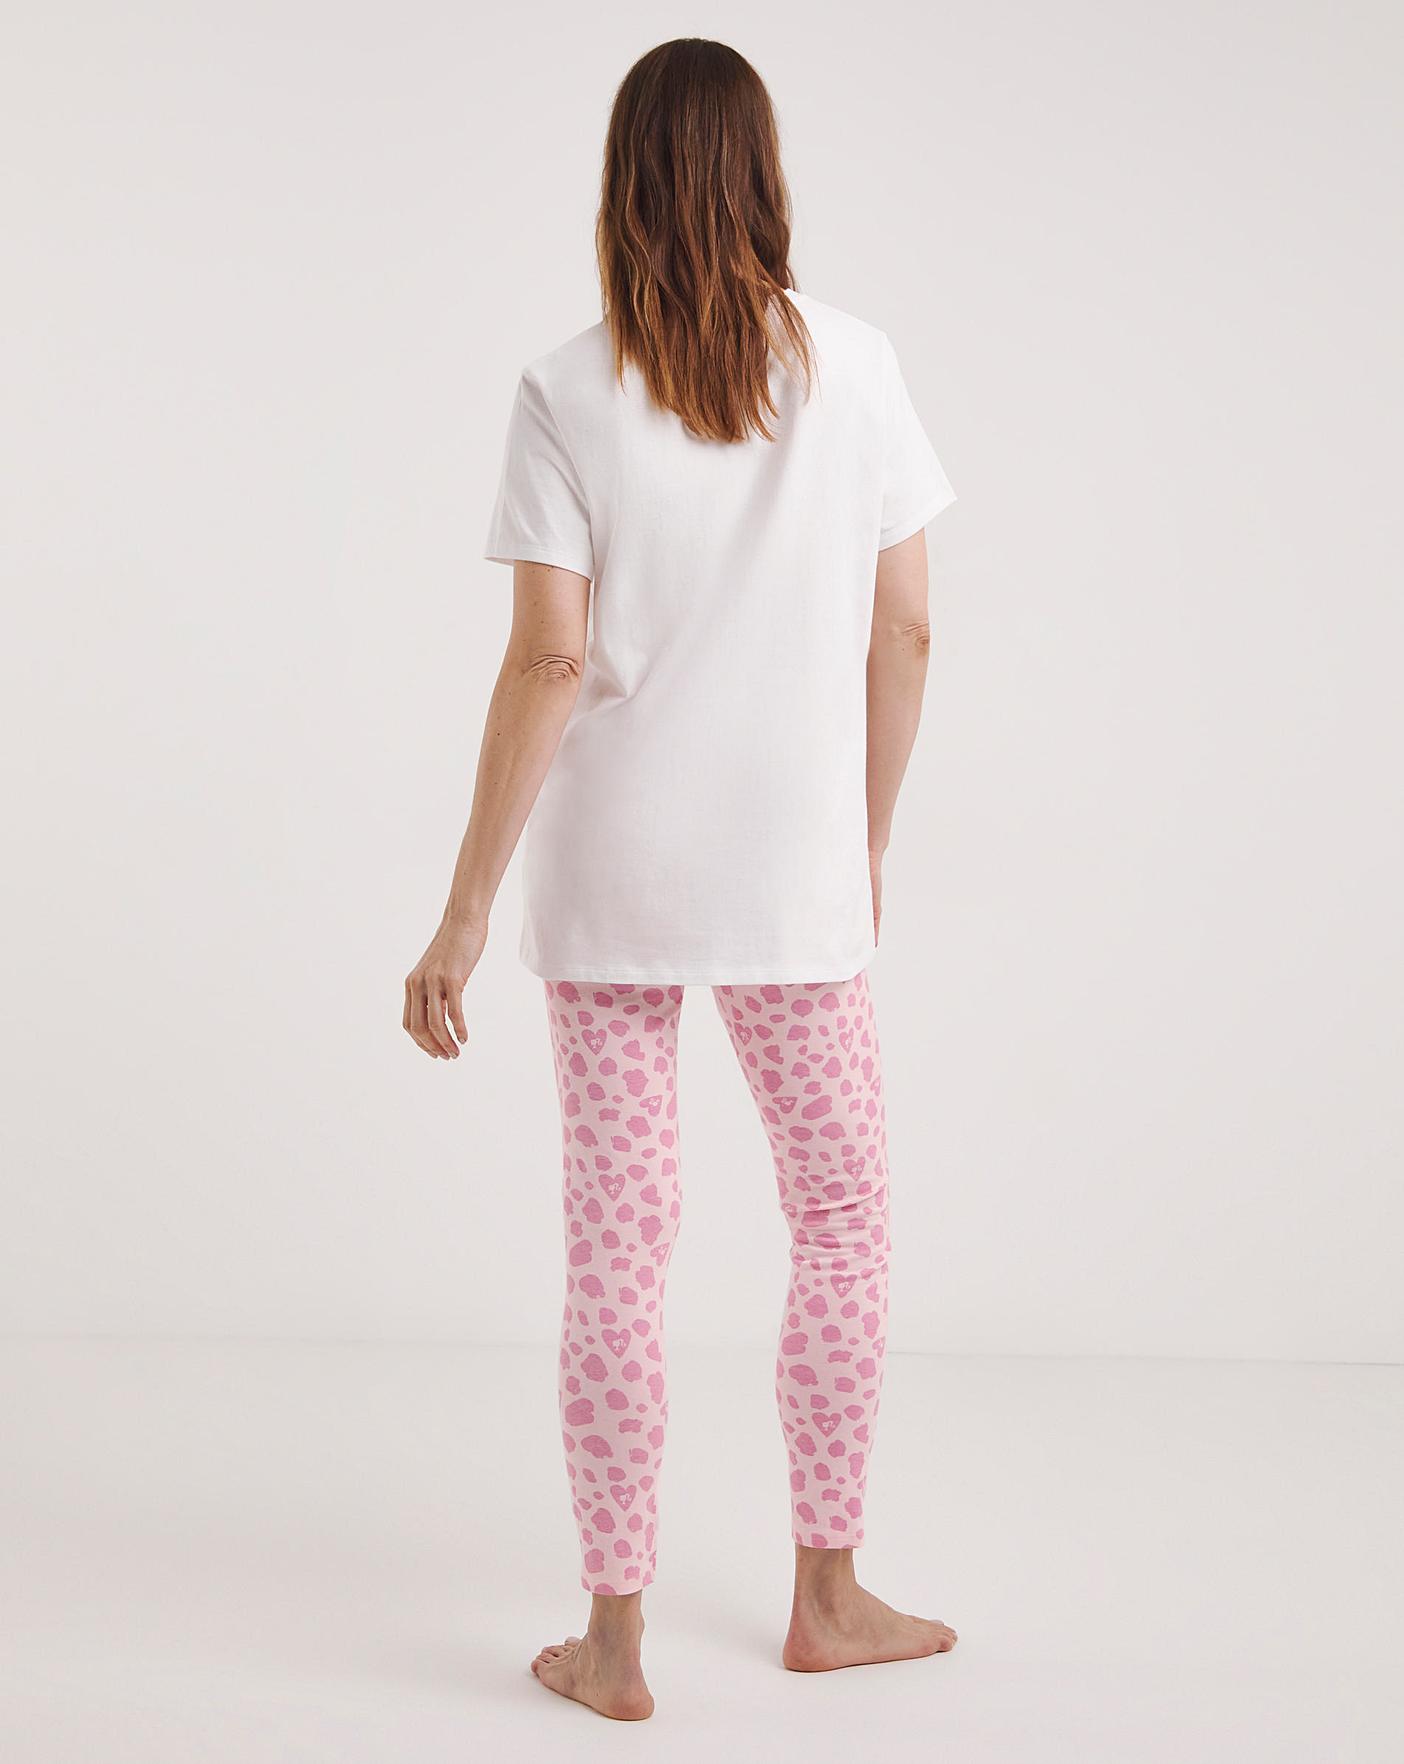 Shop PrettyLittleThing Women's Pyjama Legging Sets up to 70% Off